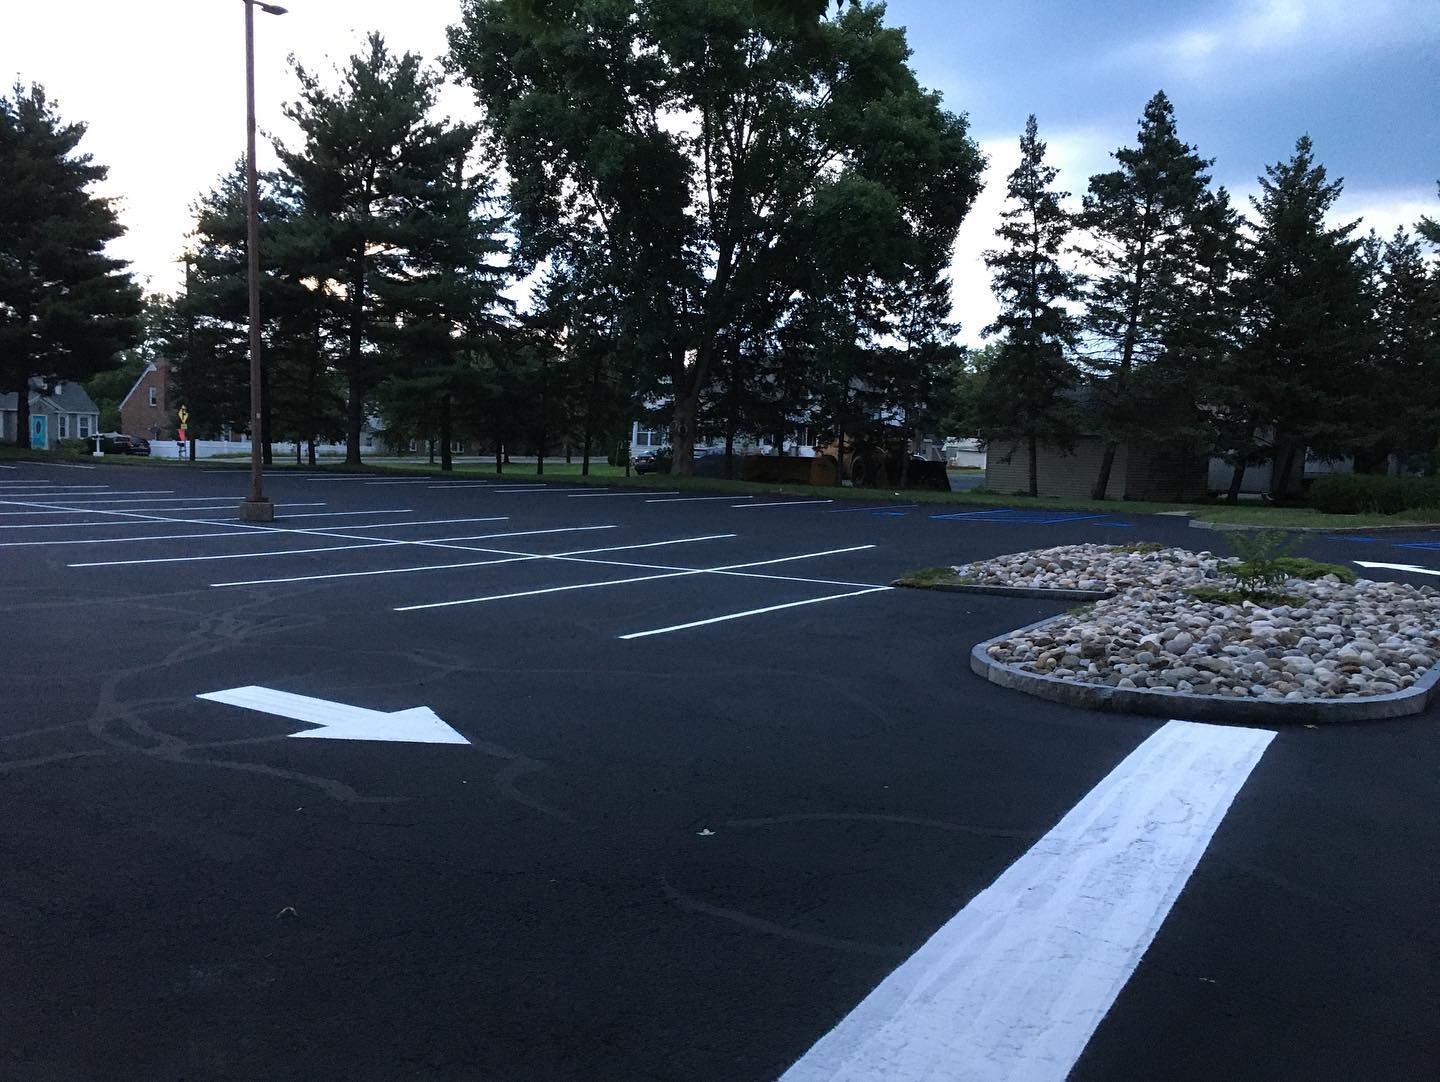 Commercial parking lot